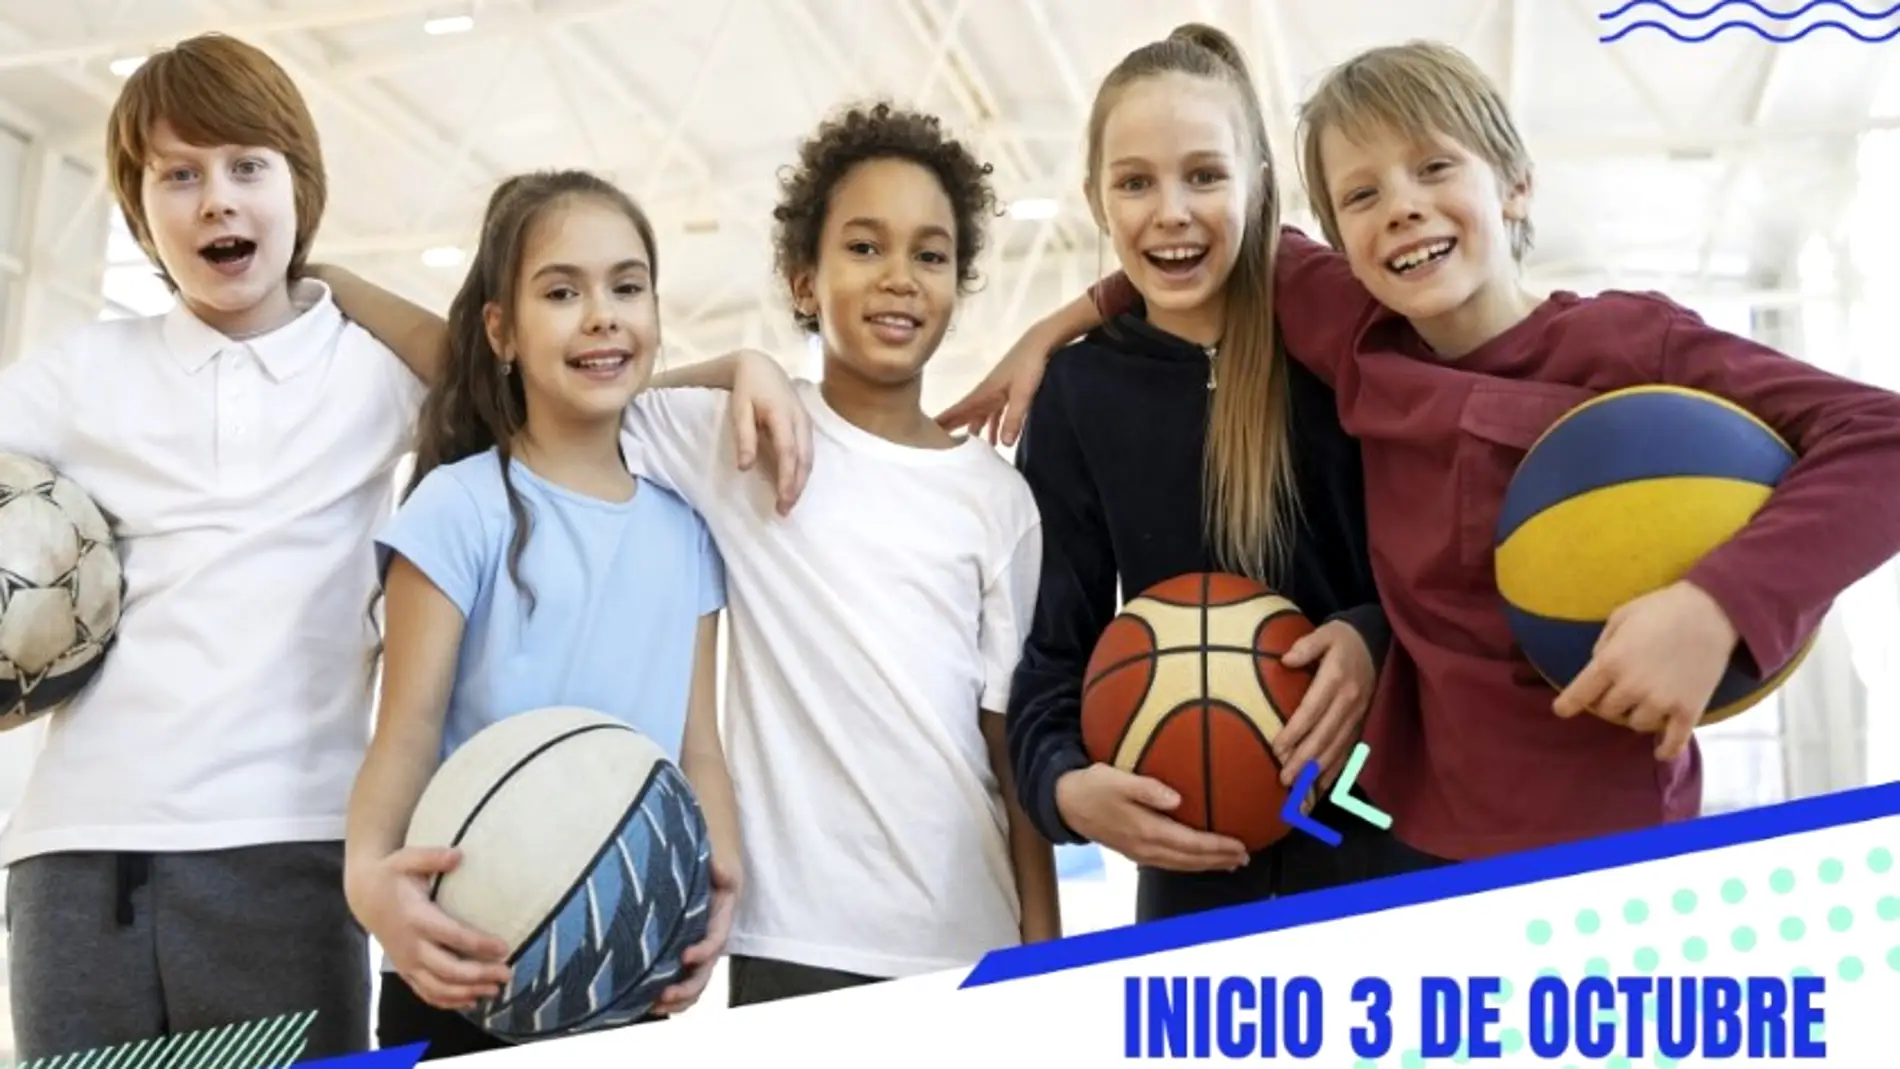 Deportes presenta la novedosa Escuela Multideportiva Municipal “Diverdeporte” en Albatera 